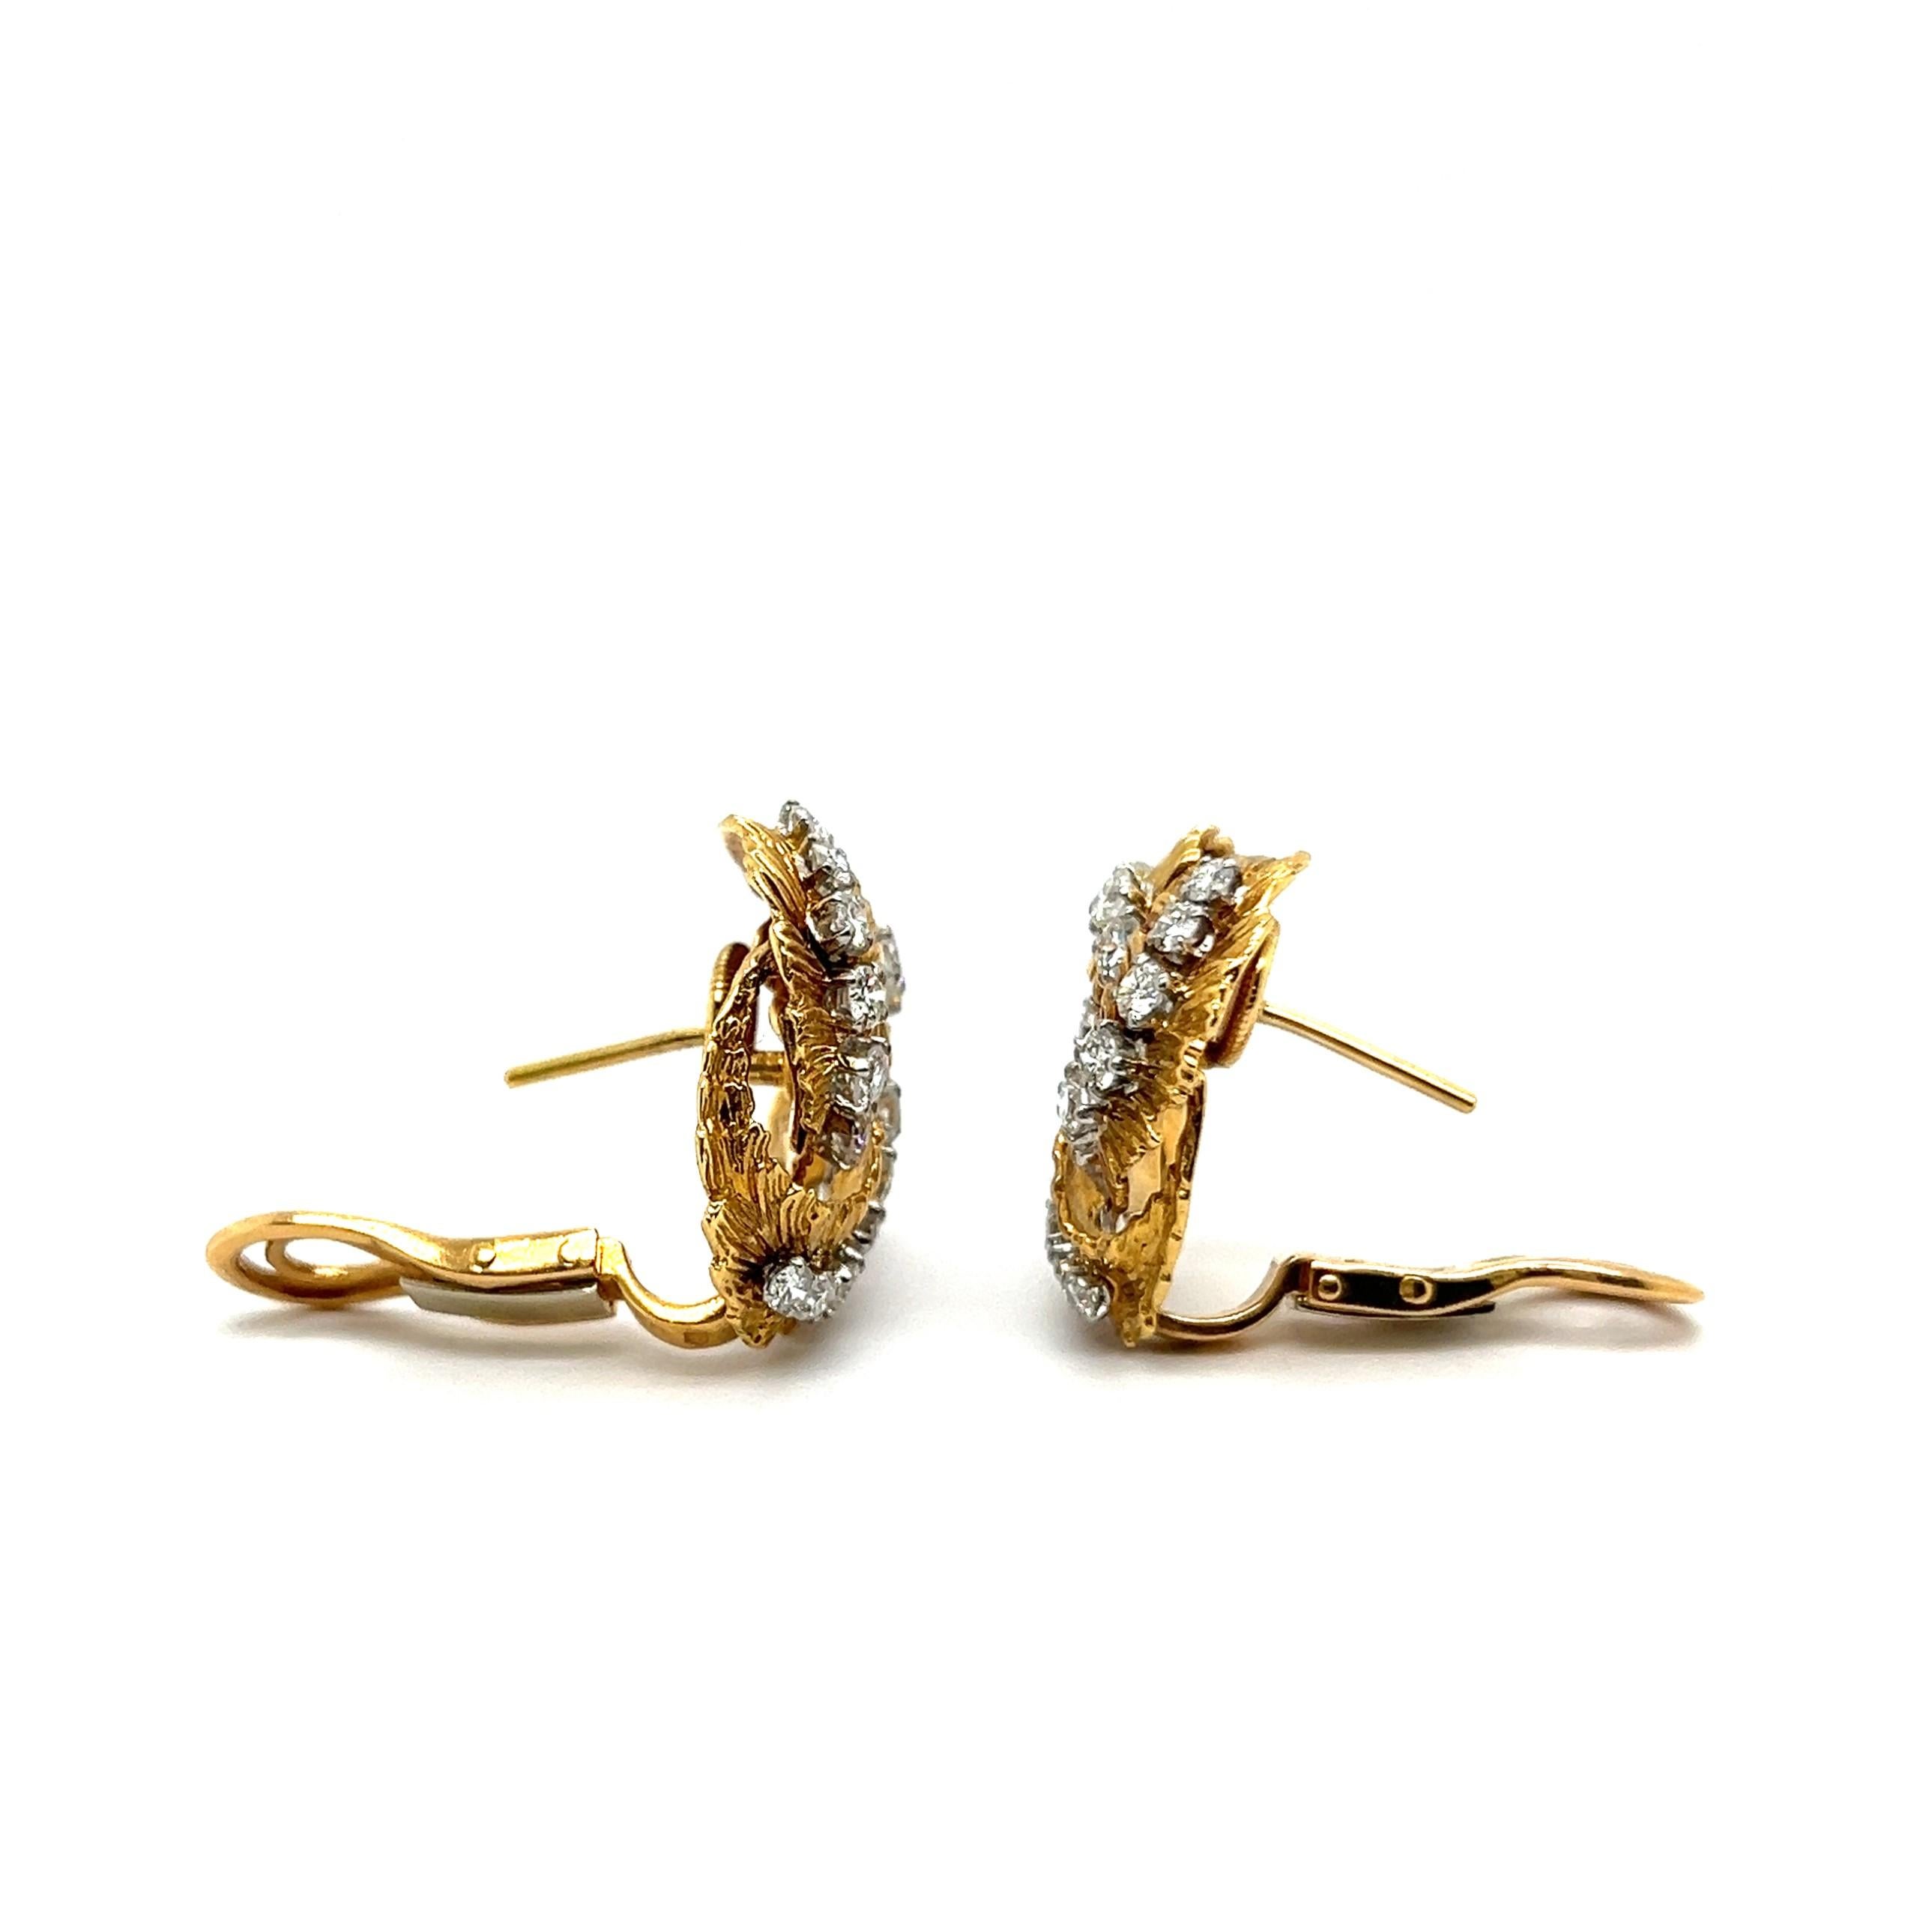 Brilliant Cut Earrings with Diamonds in 18 Karat Yellow Gold by Gübelin For Sale